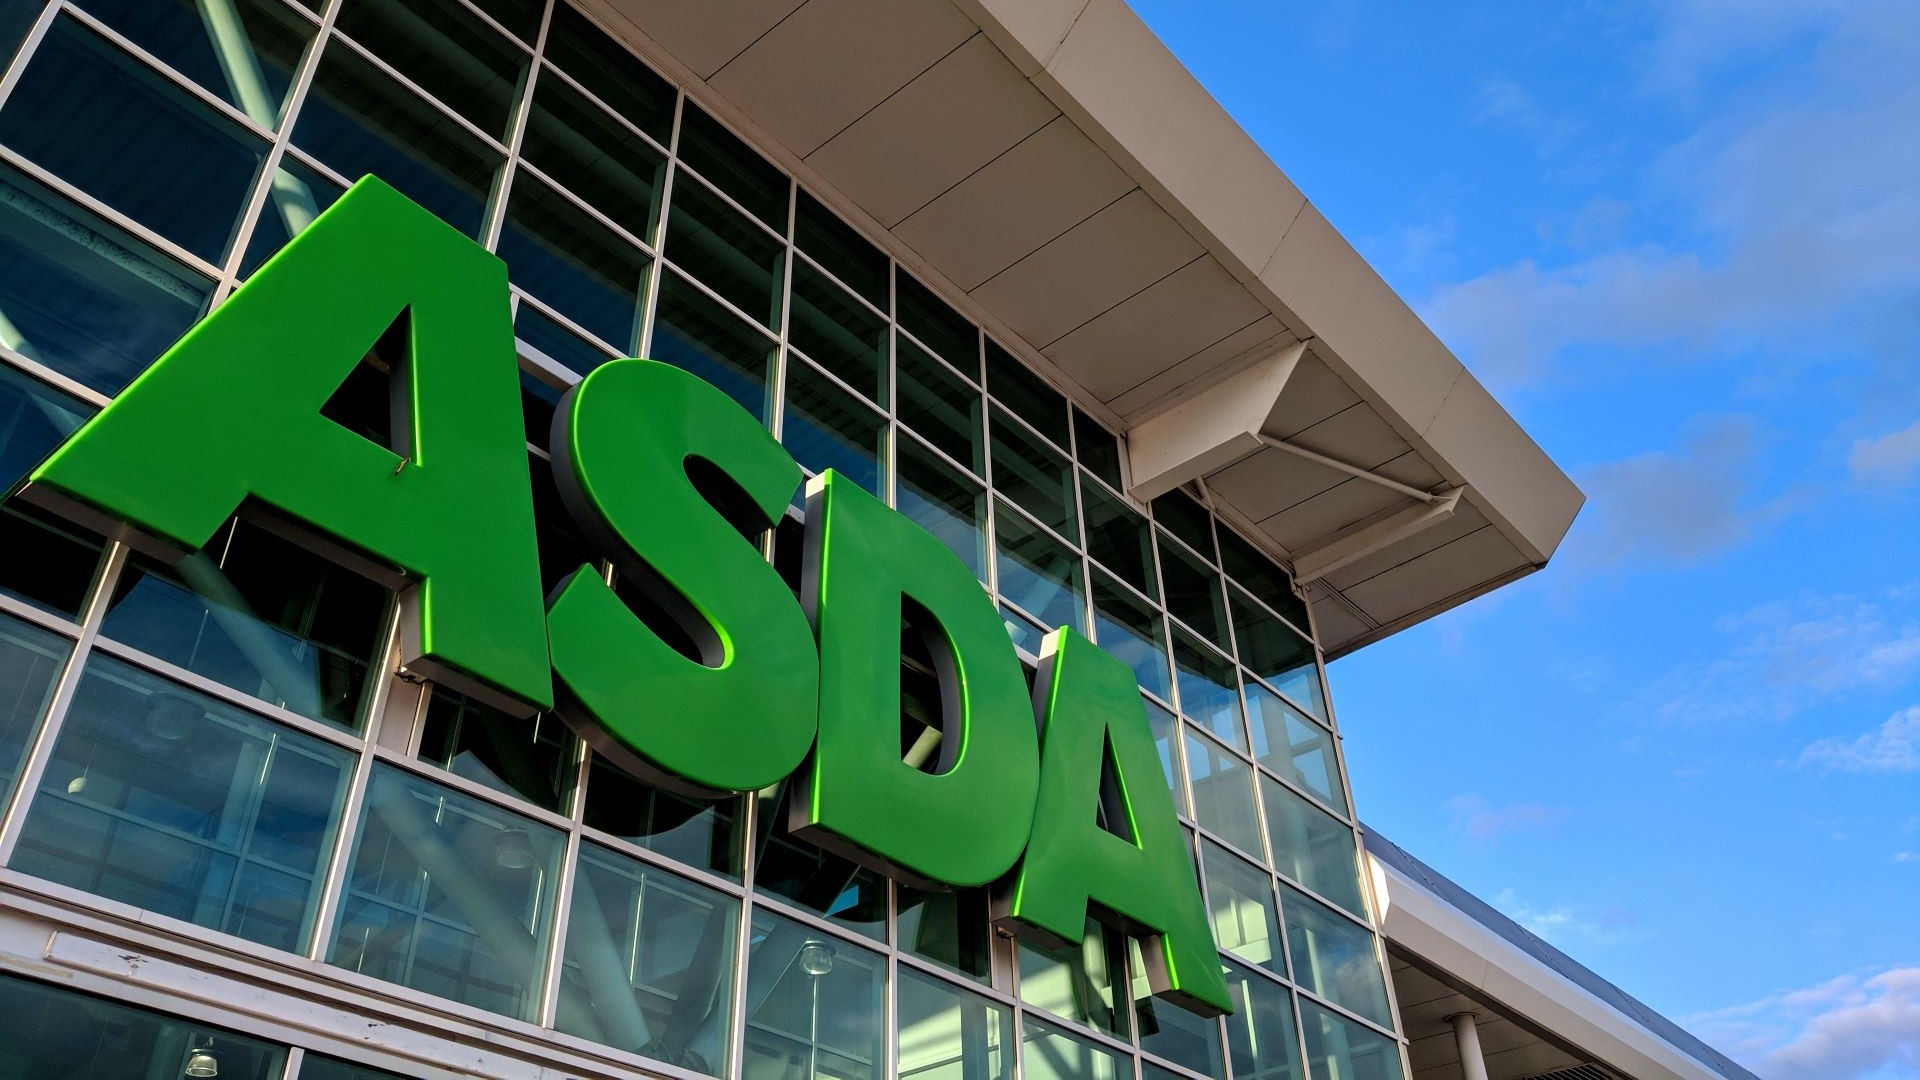 Asda news UK: Supermarket makes changes including sustainable